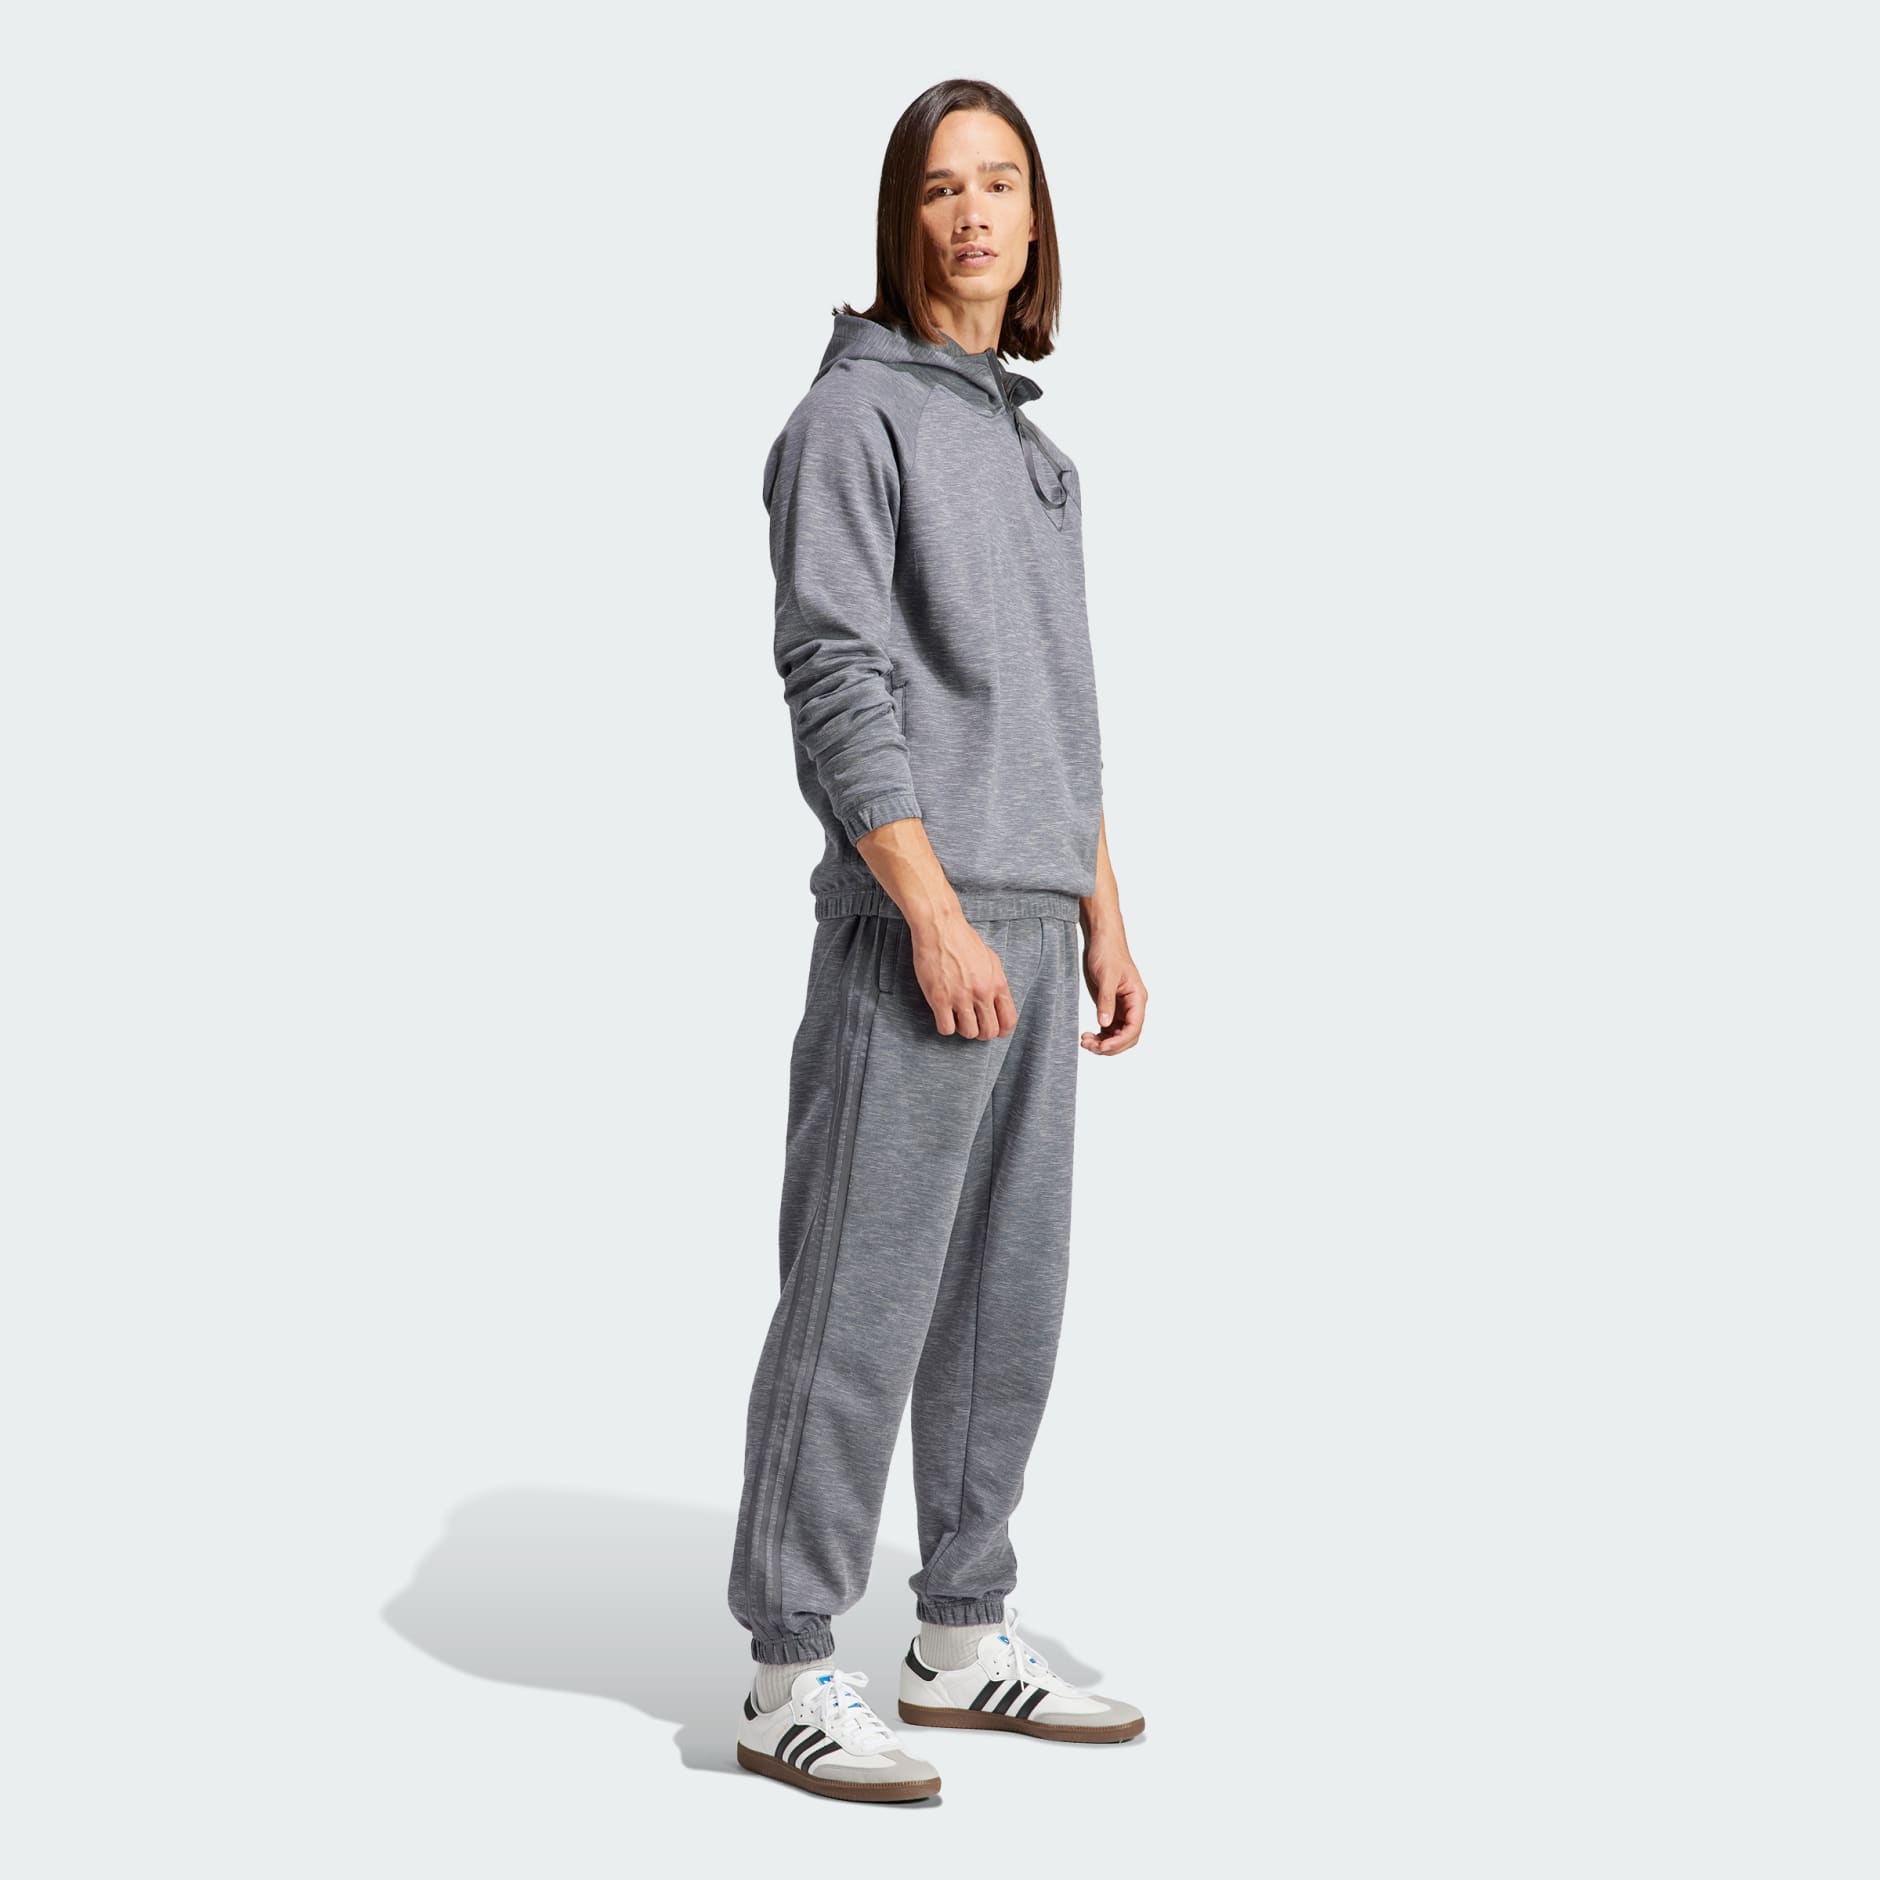 Men's Clothing - adidas Adventure Melange Sweat Pants - Grey | adidas ...